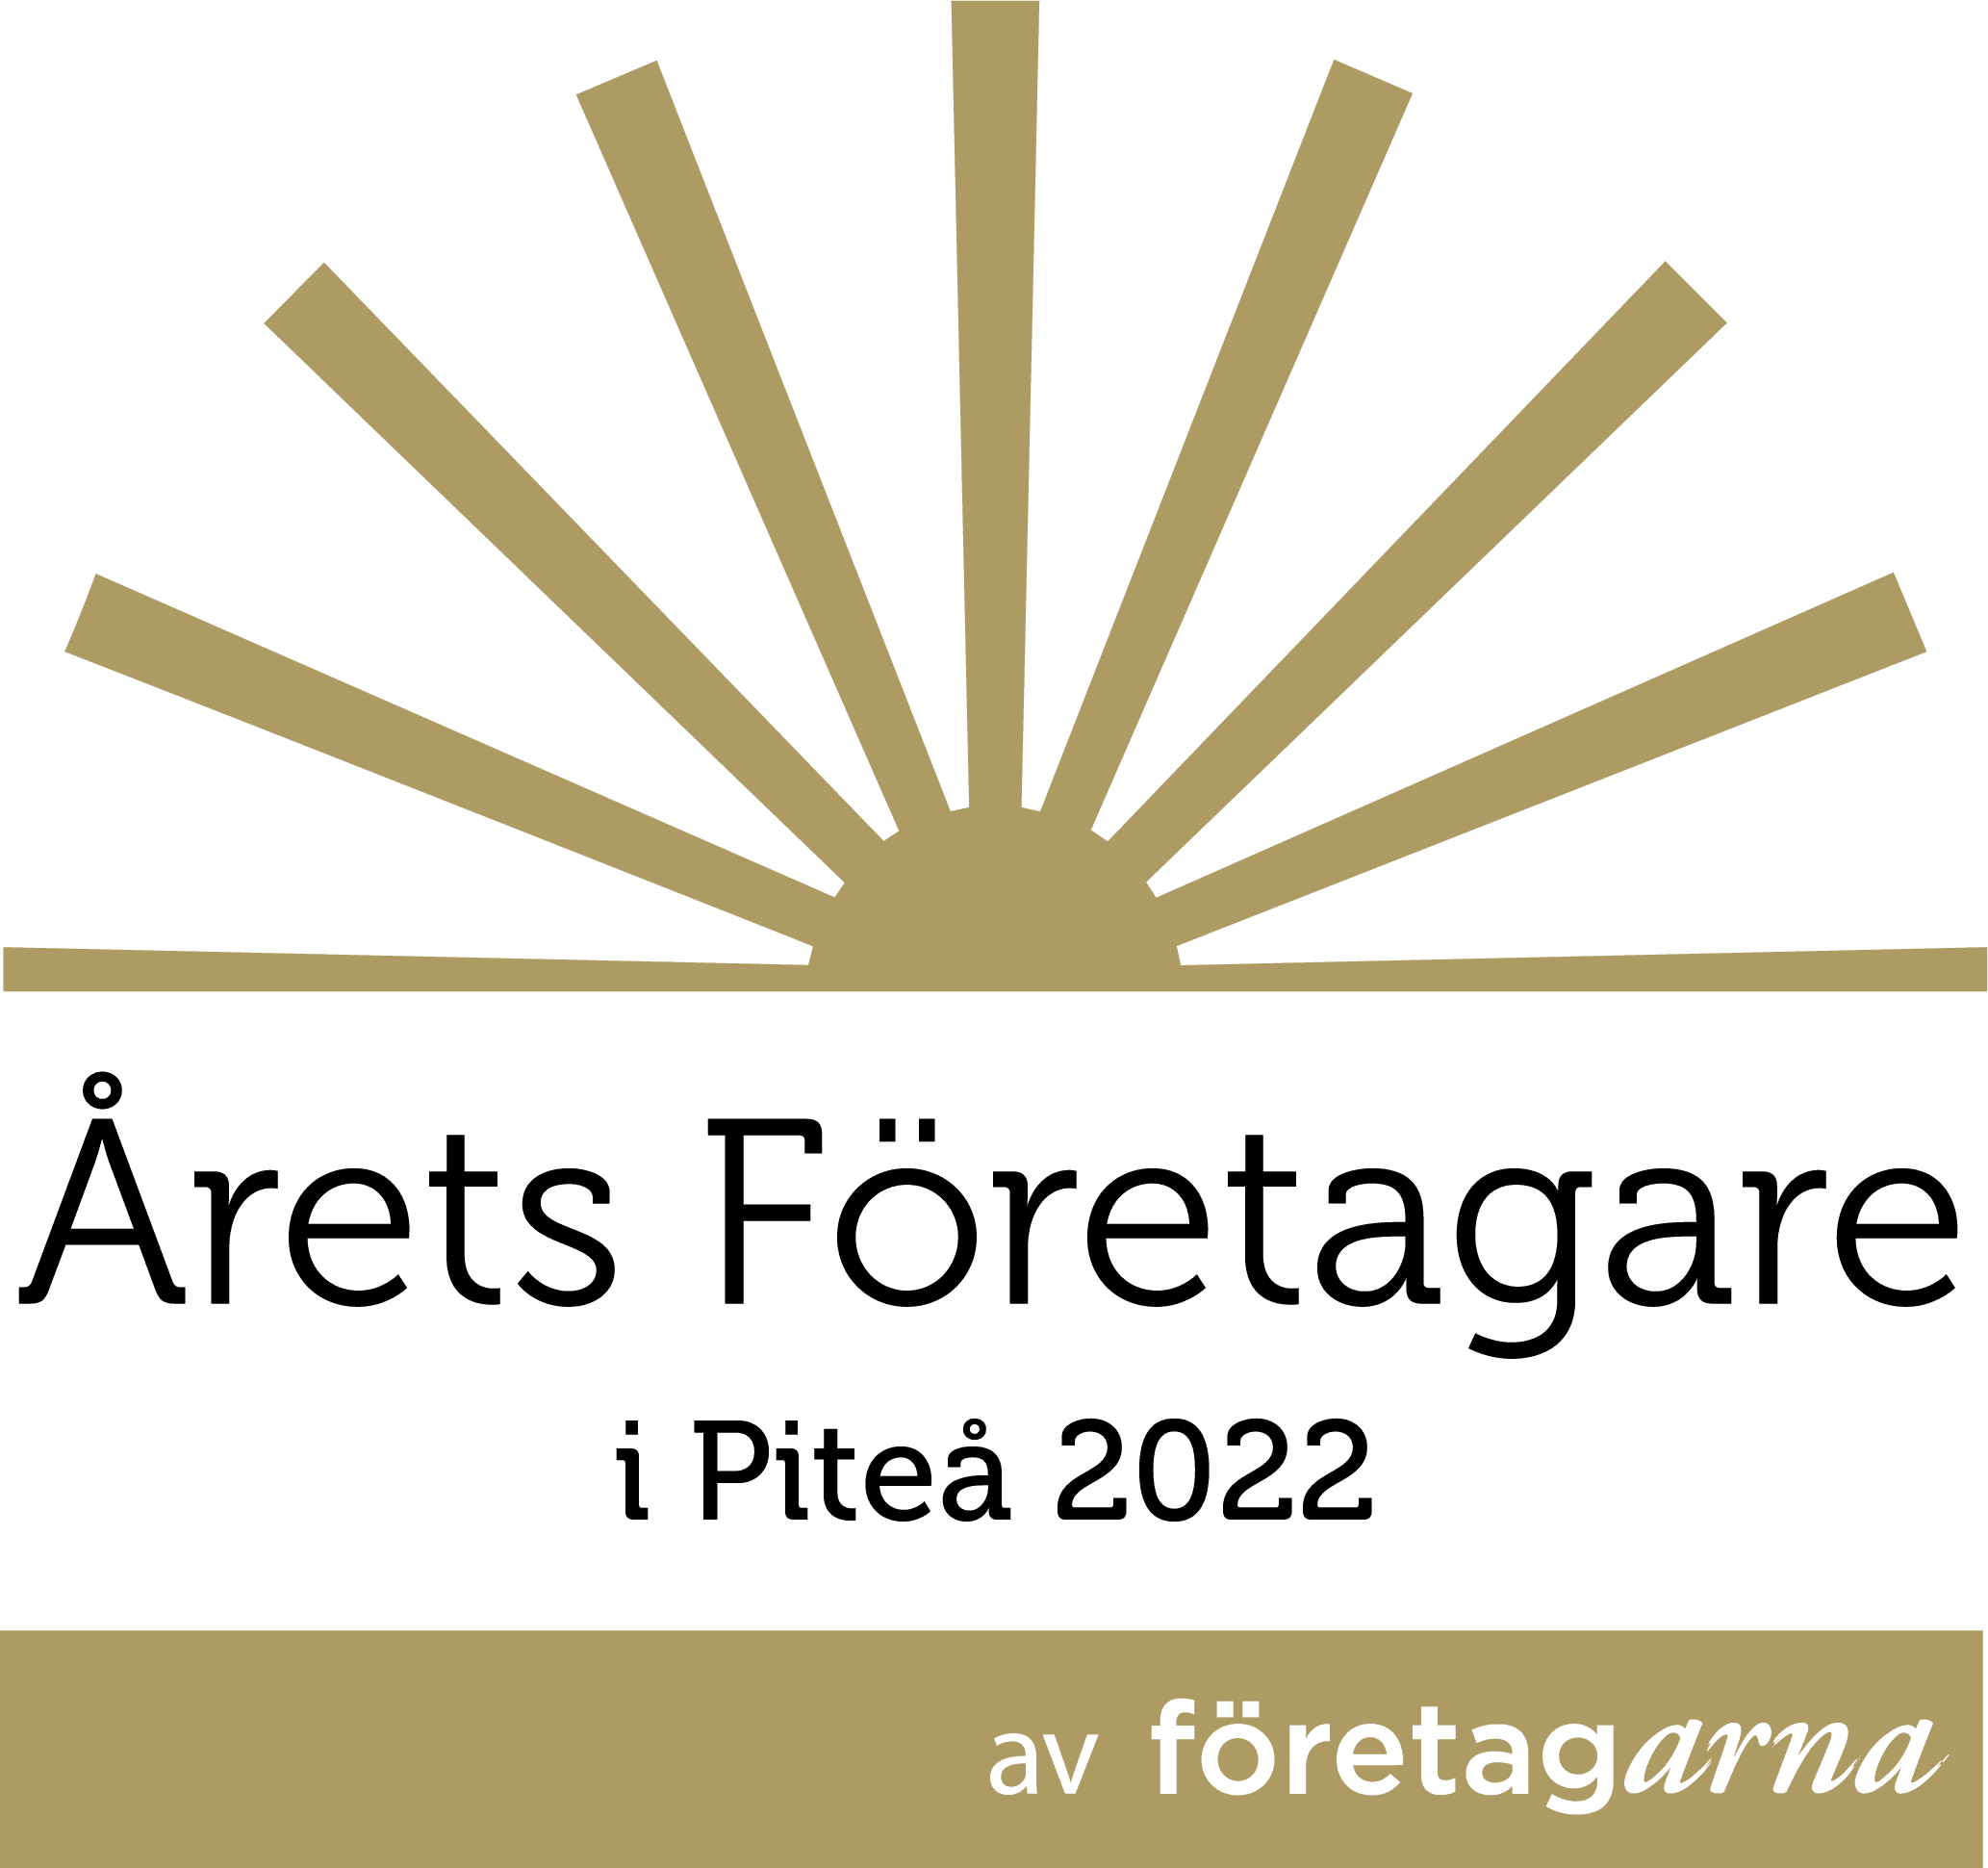 Year 2022 - Jonas, David and Andreas Wiklund were named Entrepreneur of the Year at the Piteå Business Awards organized by Företagarna.